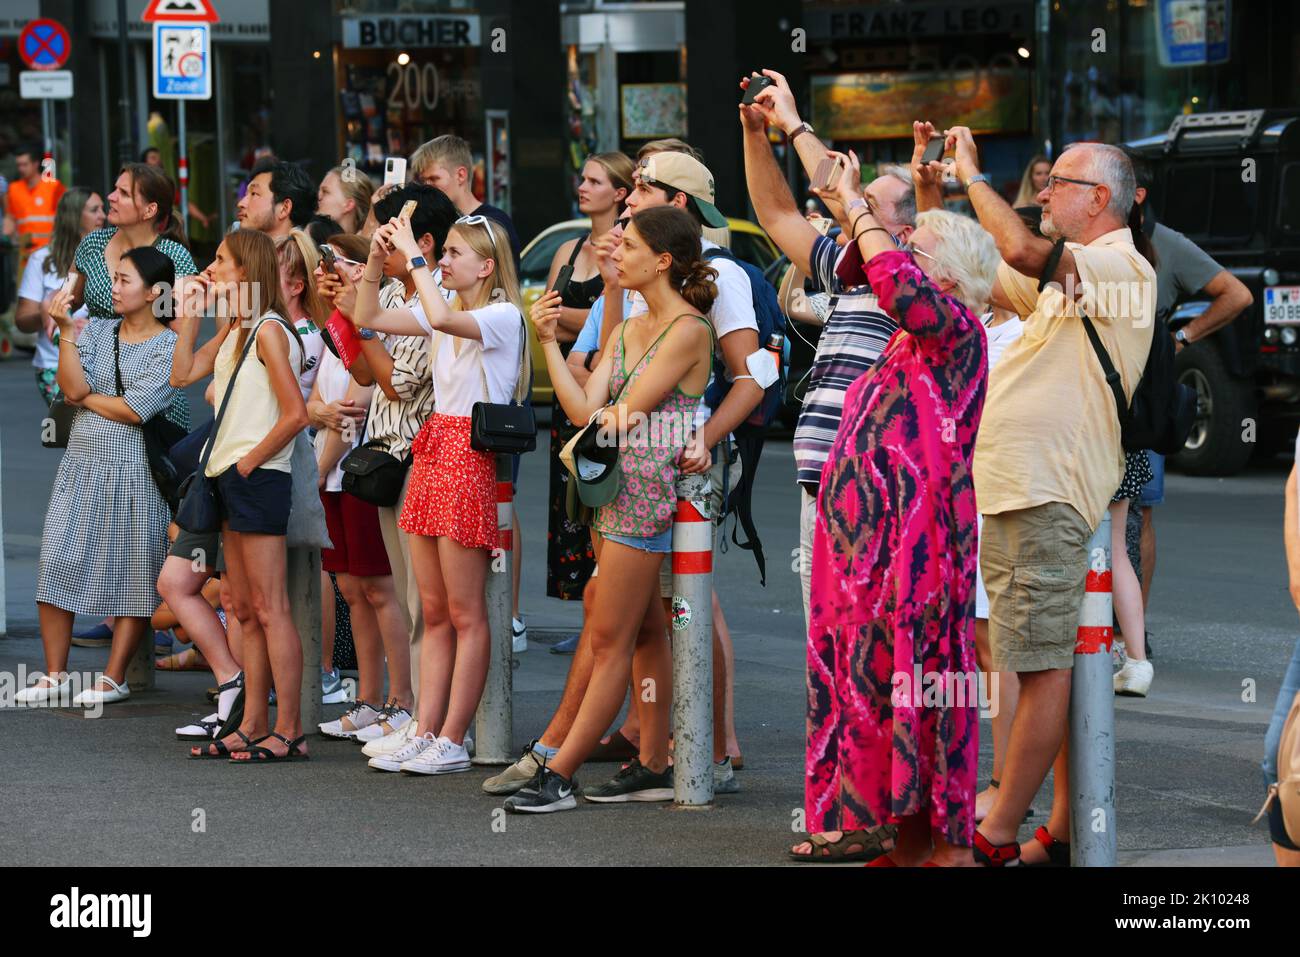 Wien, Wien Handy, Menschen fotografieren vor der Ankeruhr a wien Foto Stock